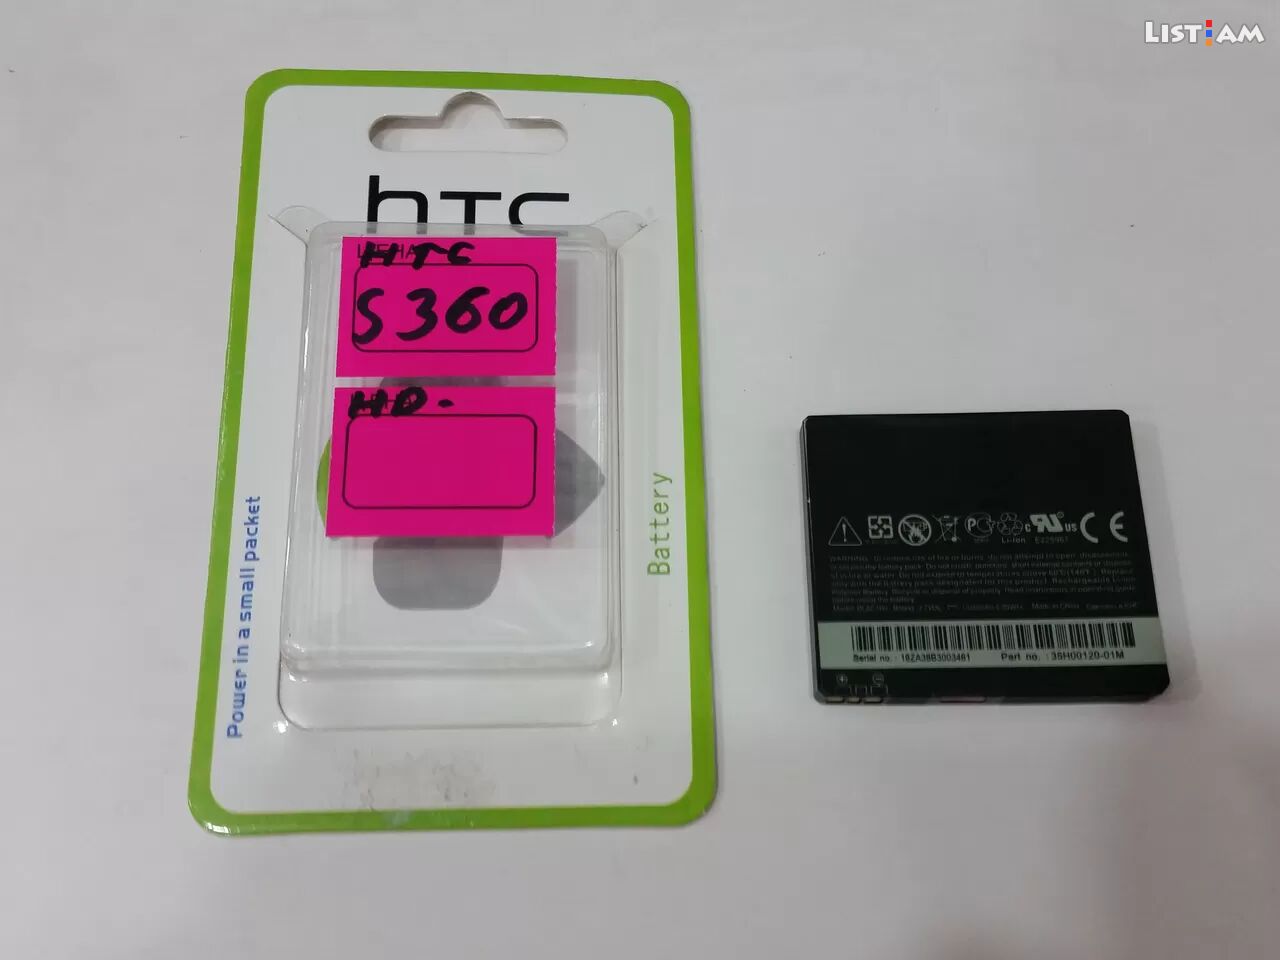 Htc s360 battery